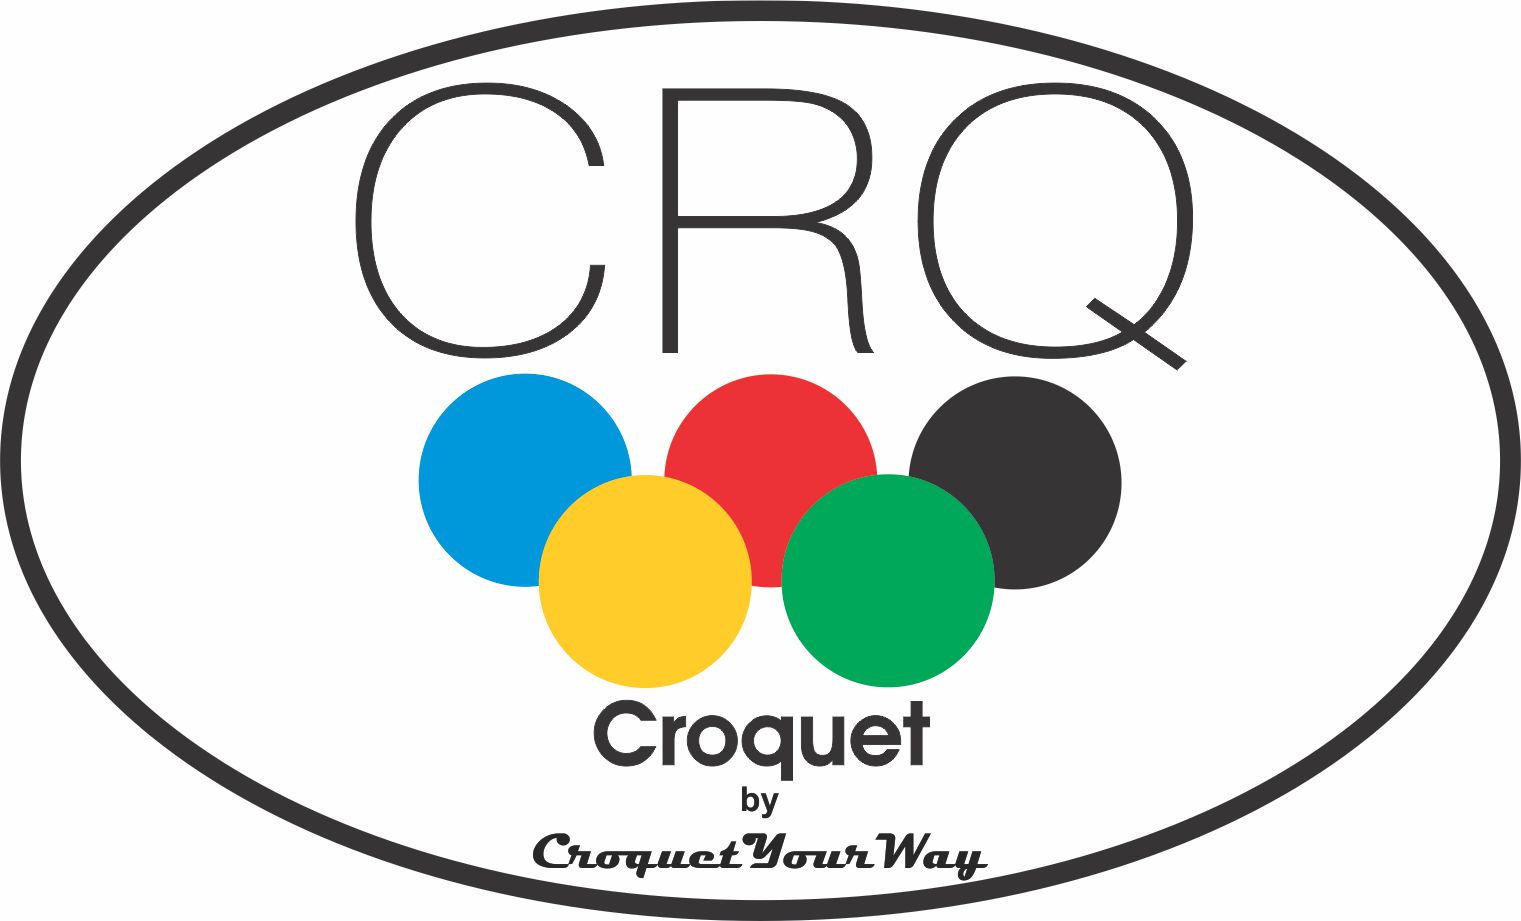 CRQ 710 Croquet Balls CRQ PRO-BALZ, USA, Classic, High Action, 10.8 oz, Blue